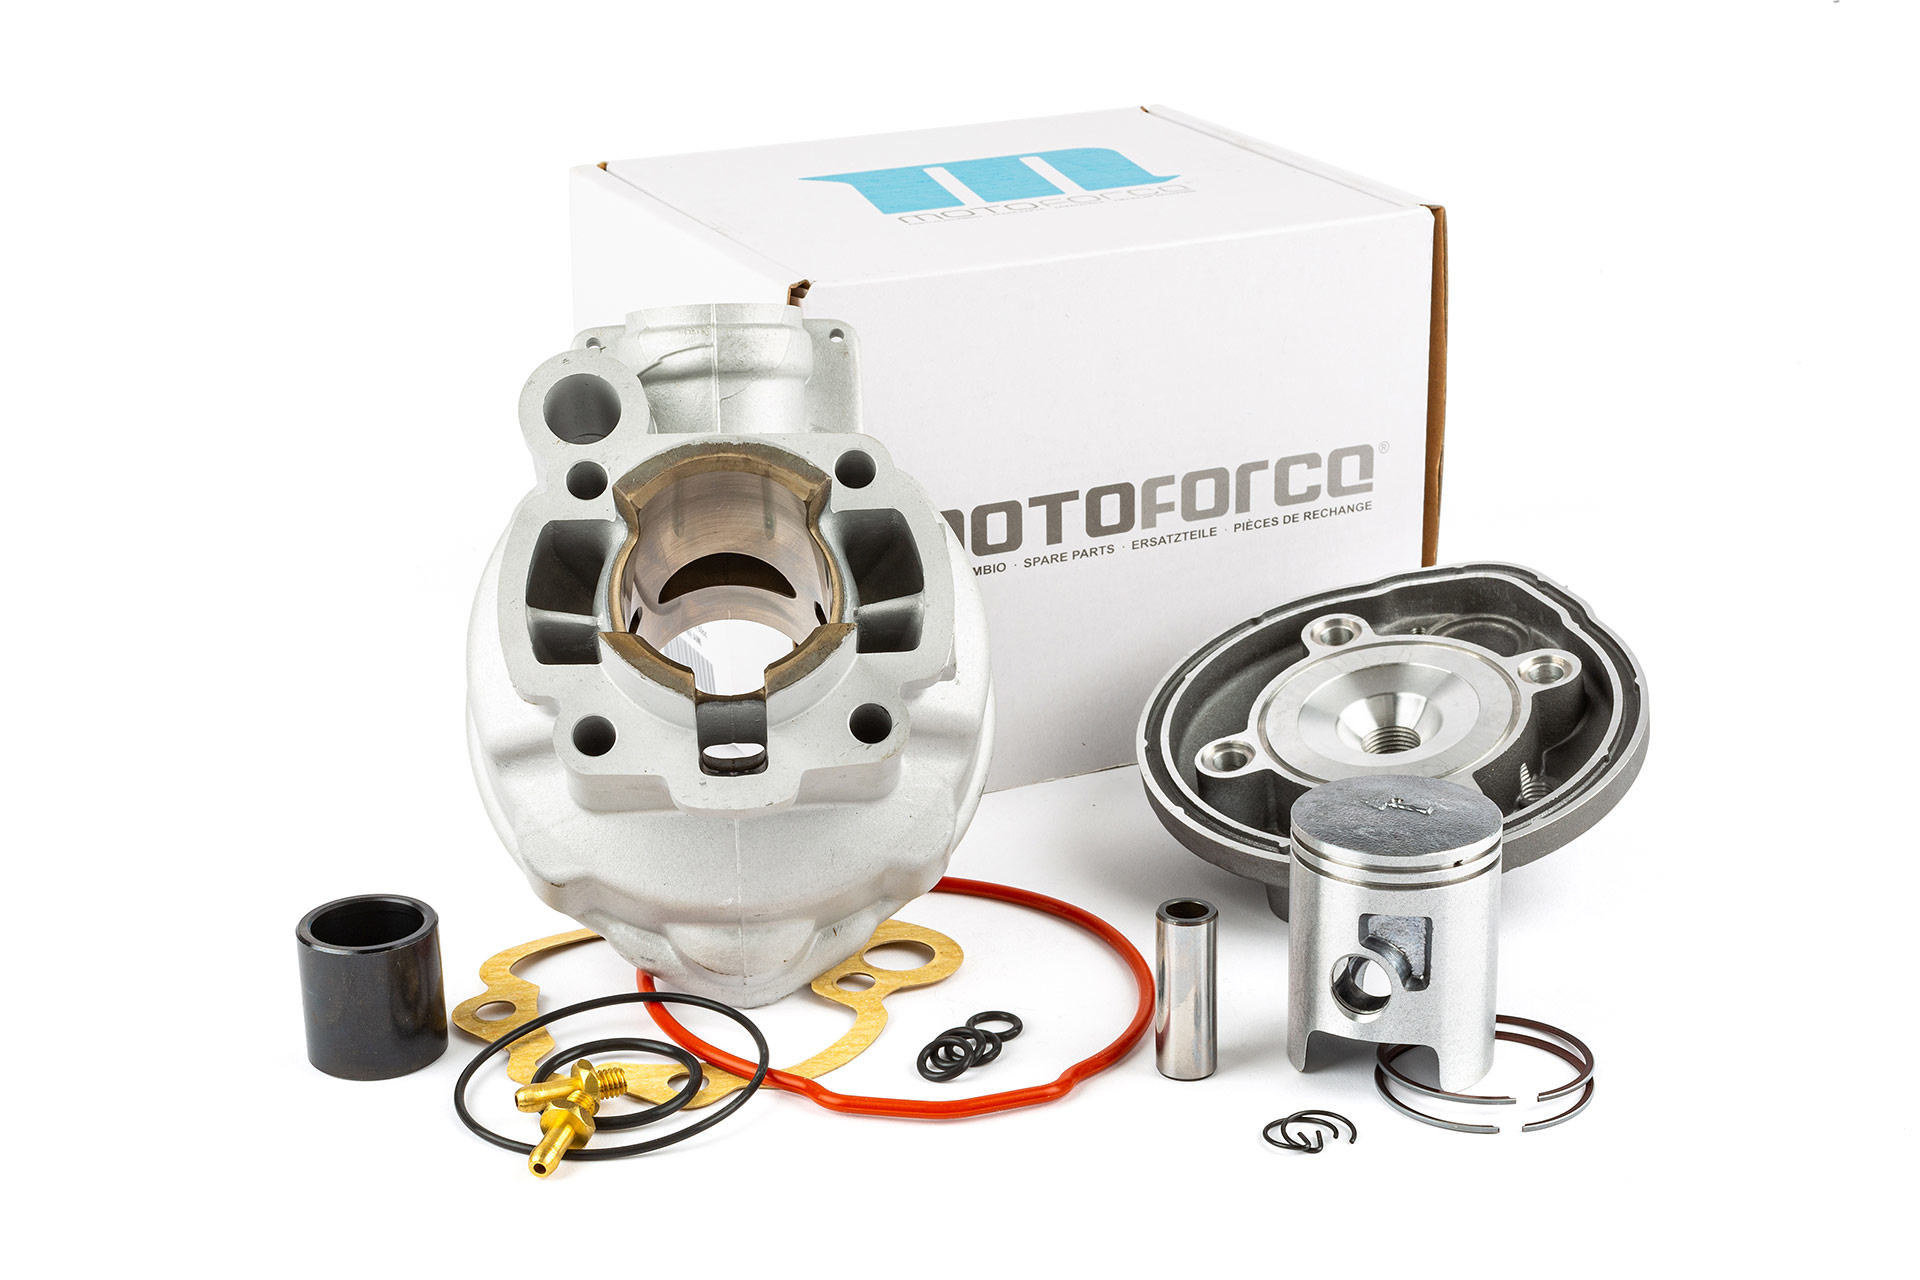 Cilindro Motoforce Kit 50cc Alumínio Am6 0